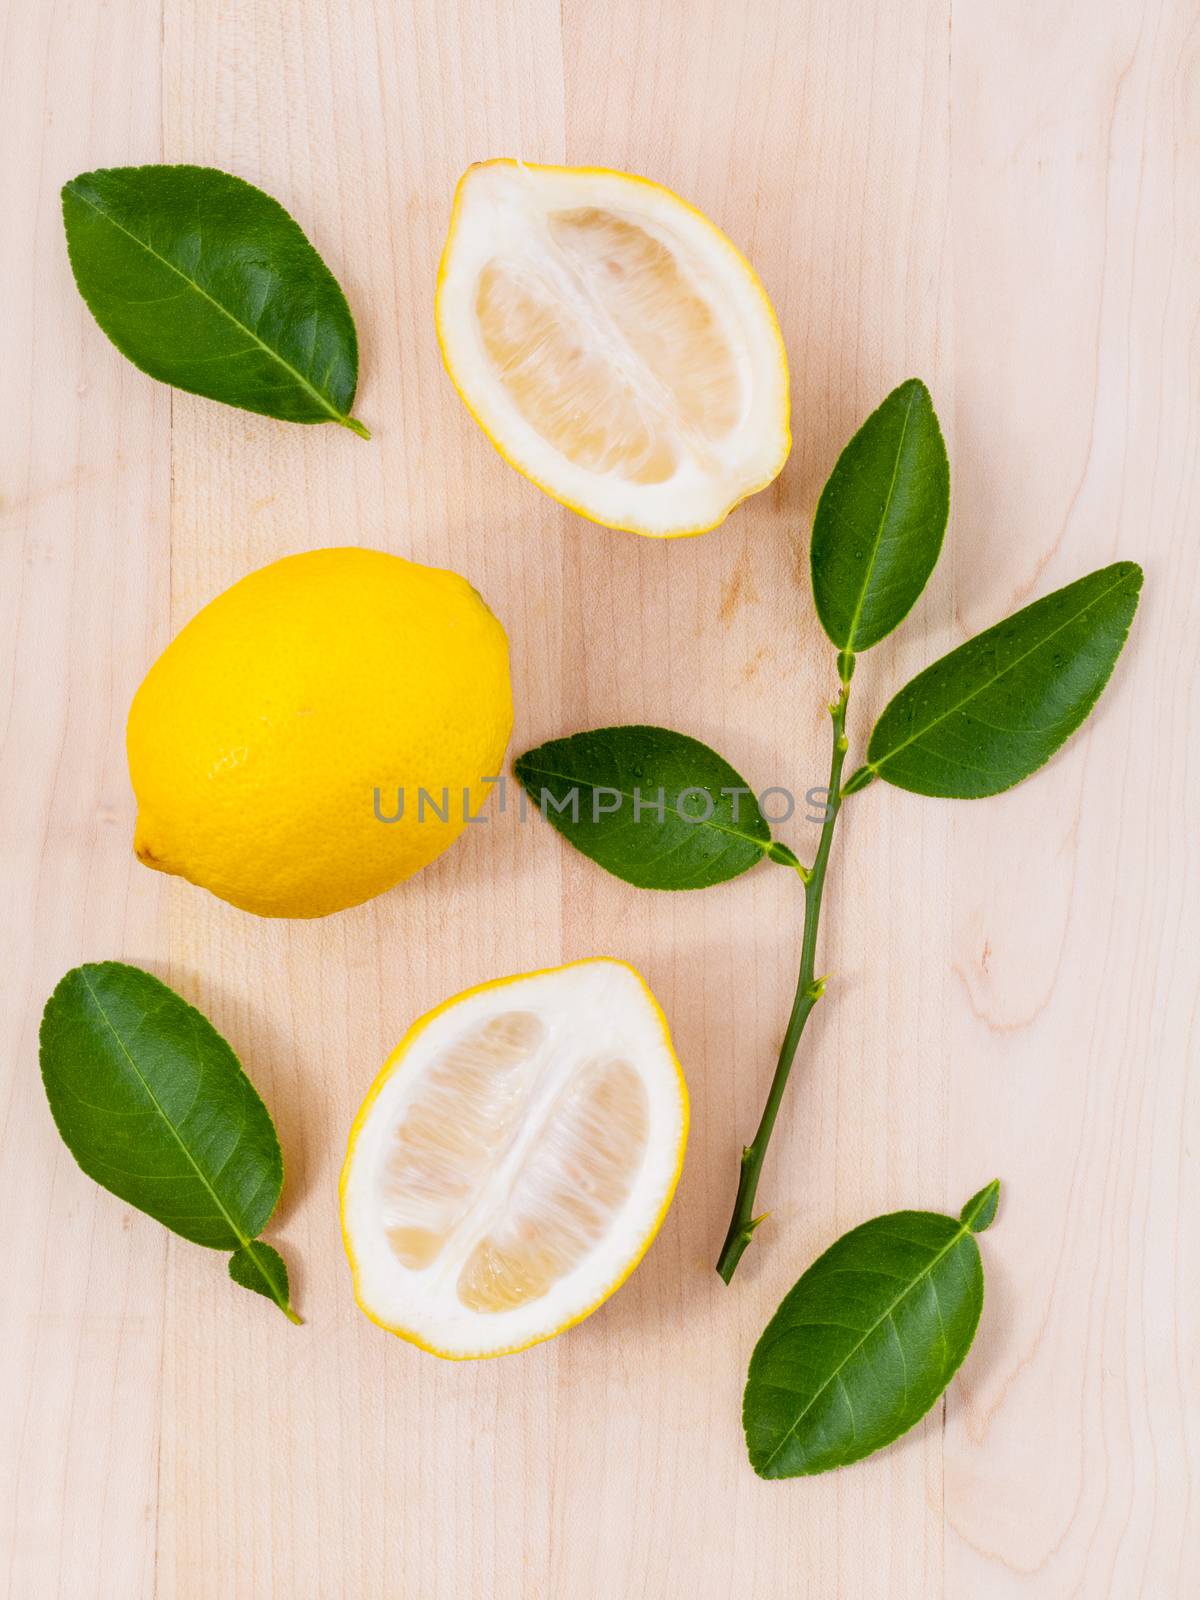 Fresh lemons and o lemons  slice on wooden background with  lemo by kerdkanno